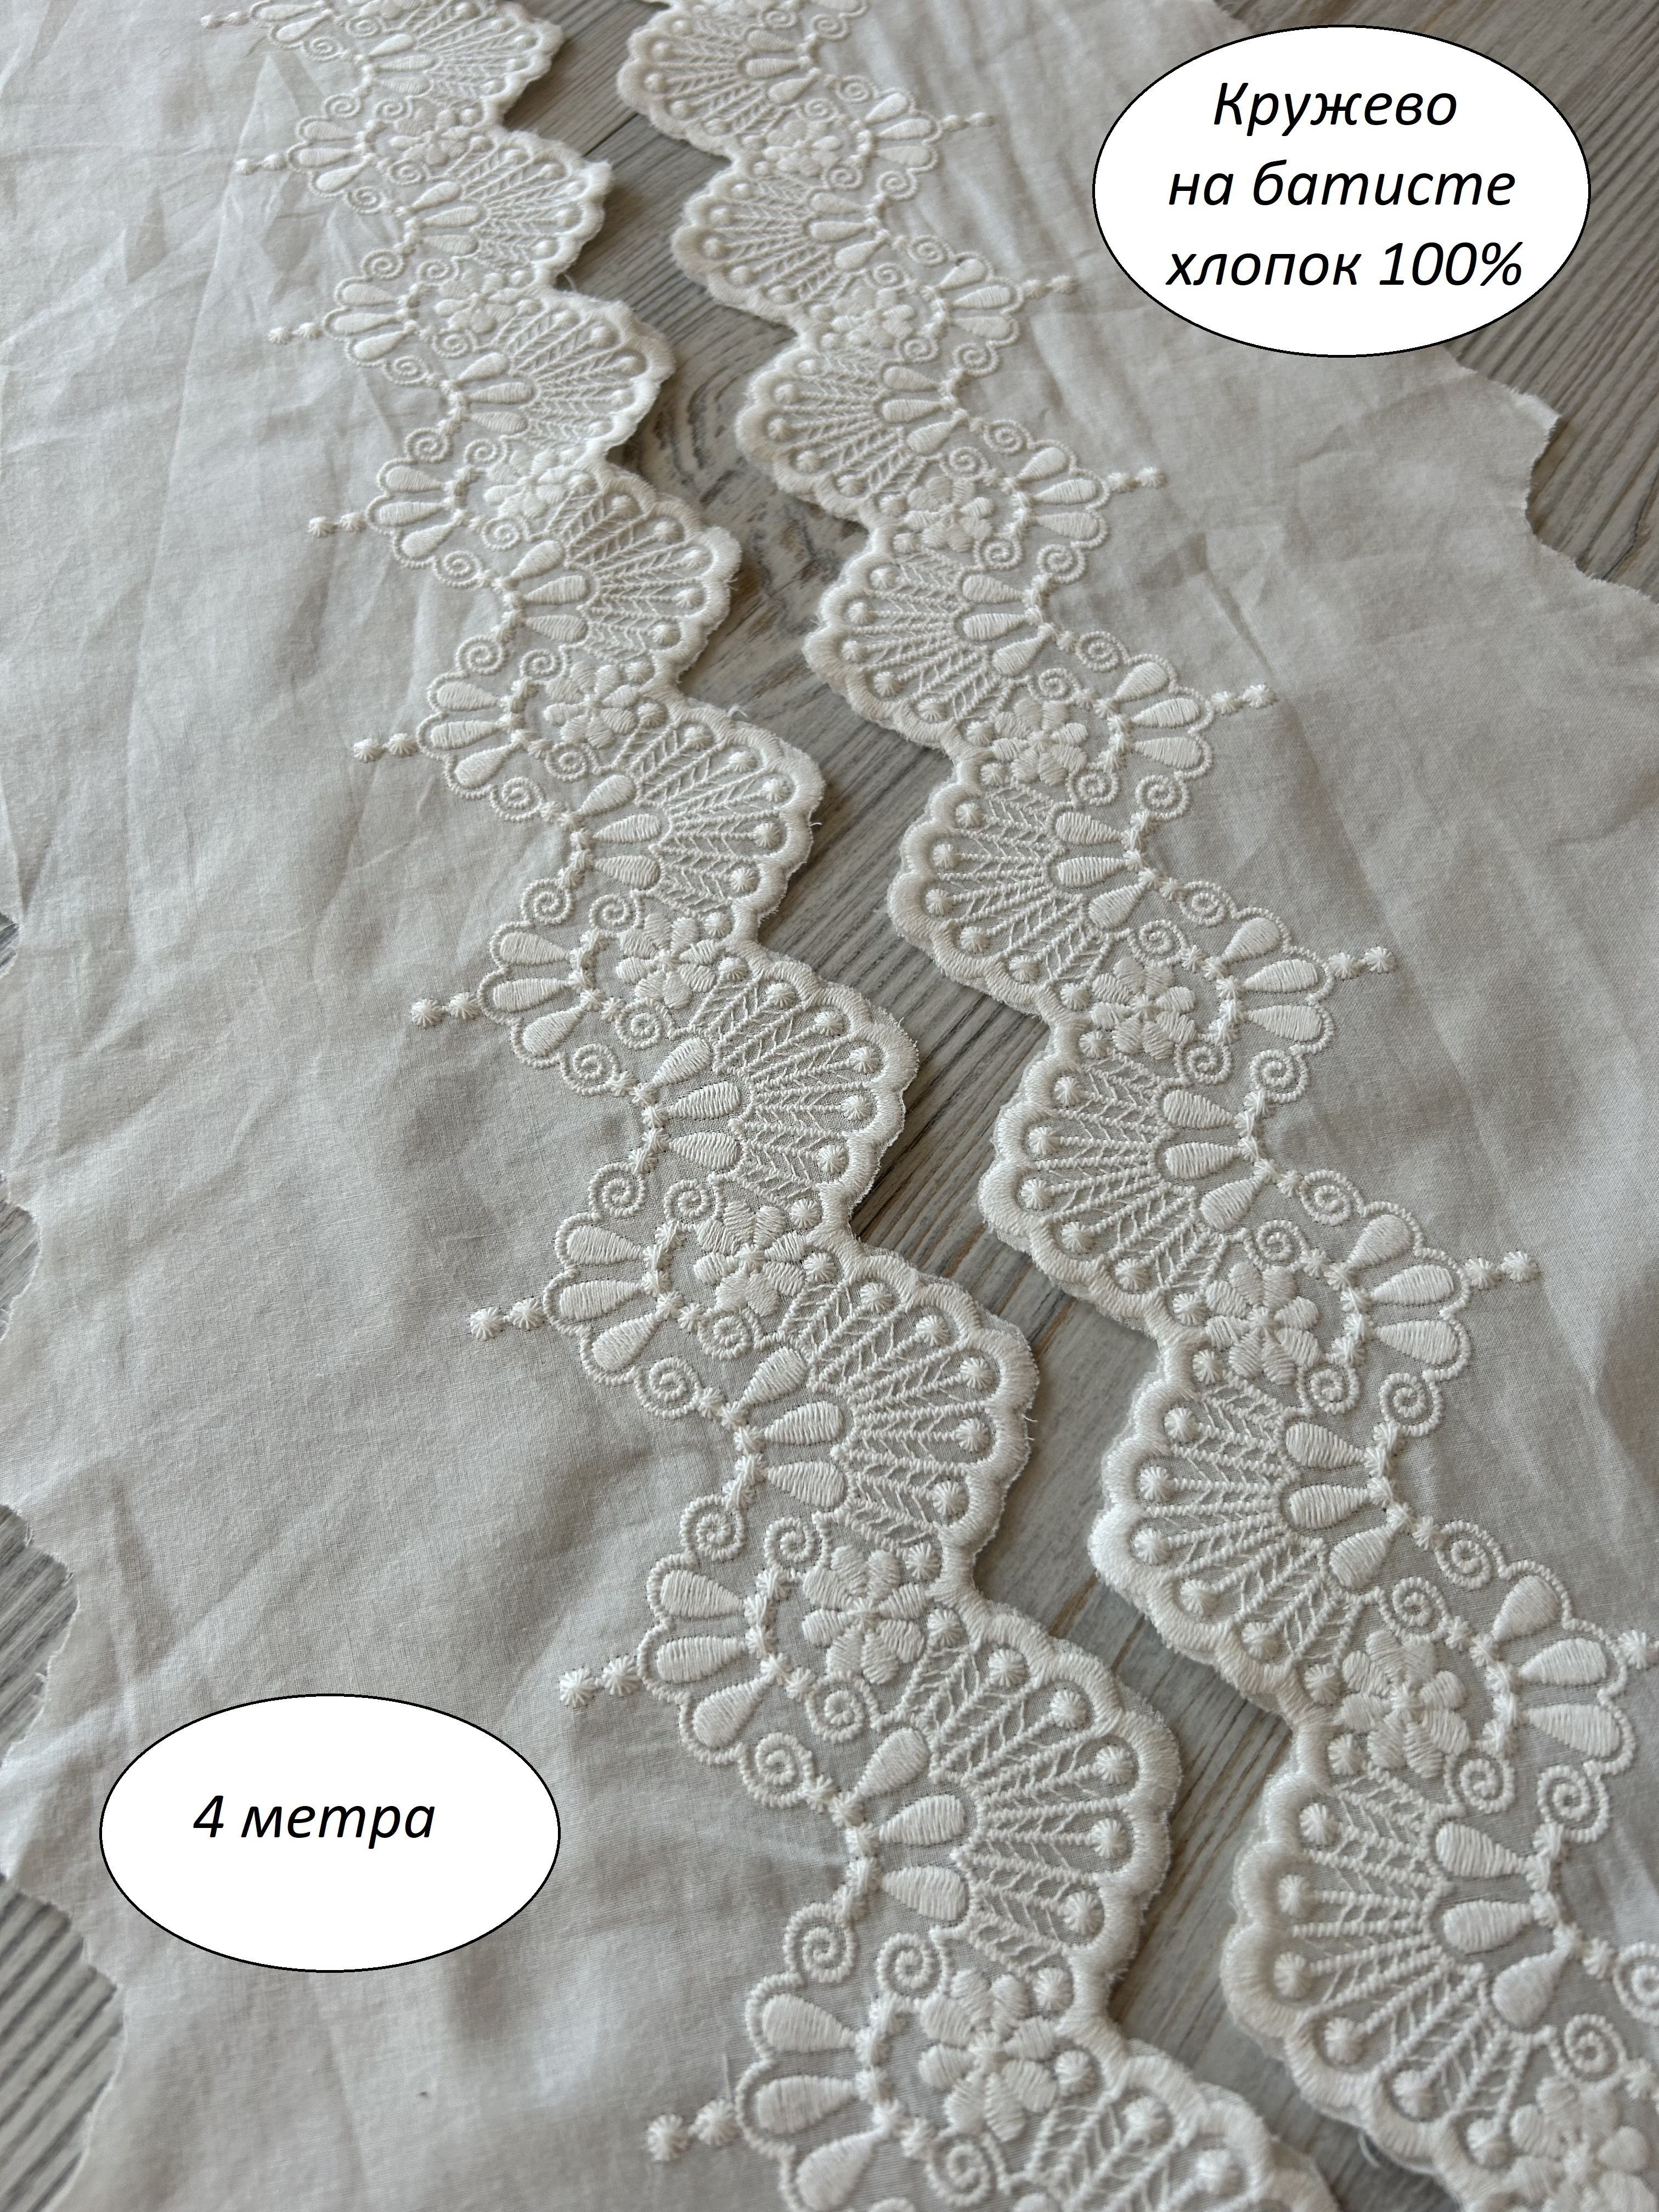 White Cotton Cloth Lace Trims, Кружево Хлопок